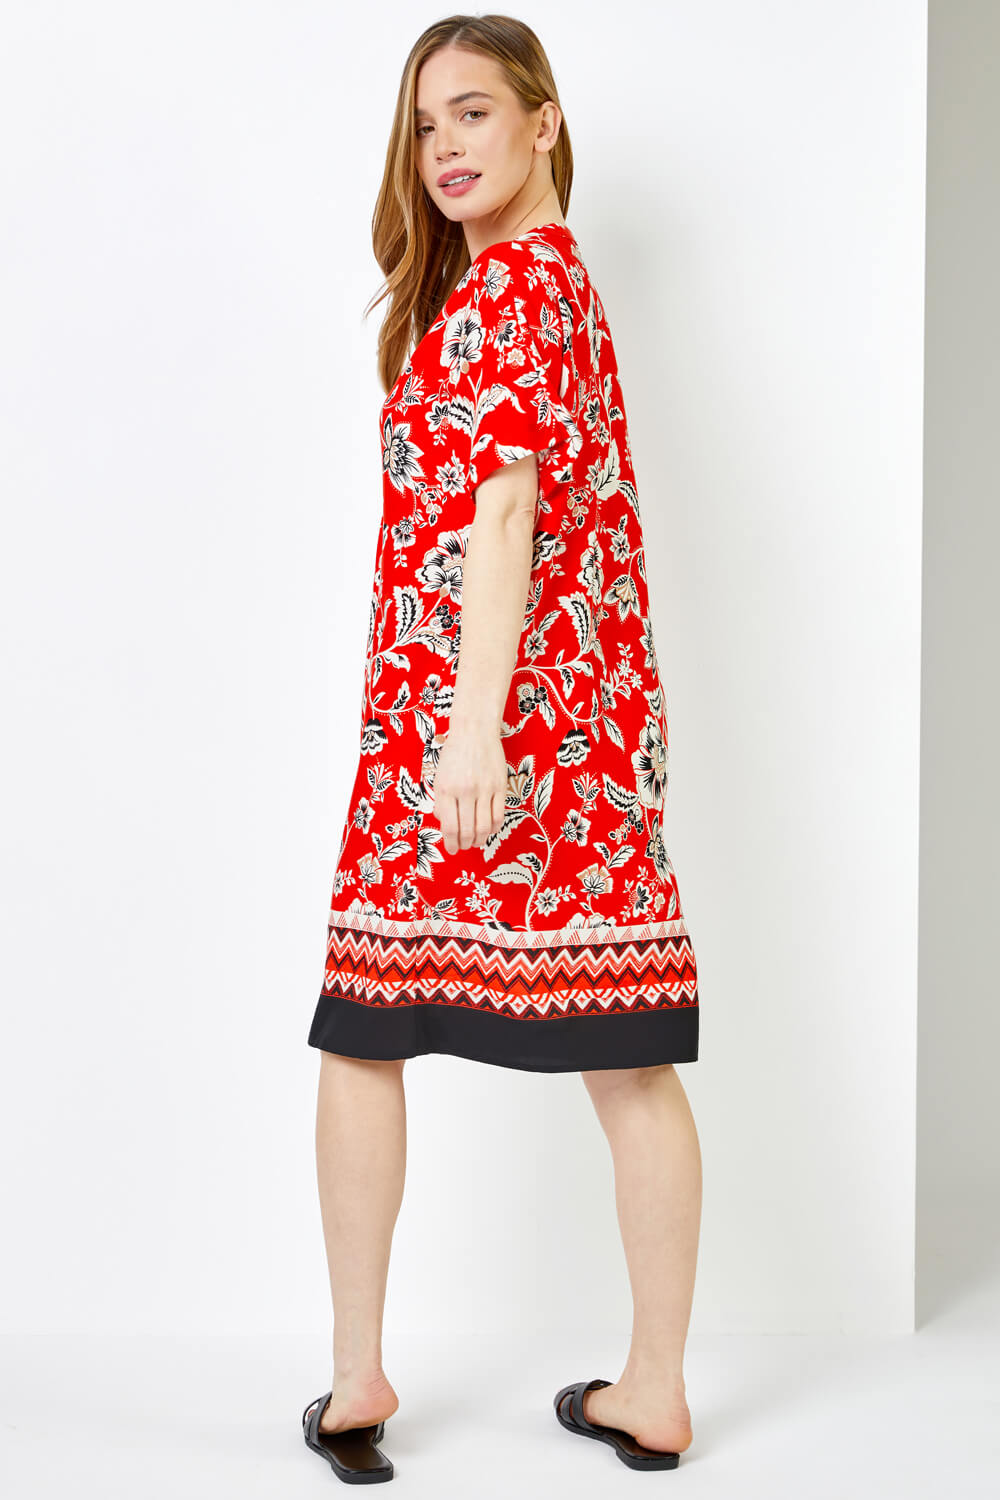 CORAL Petite Contrast Floral Print Shirt Dress, Image 2 of 4